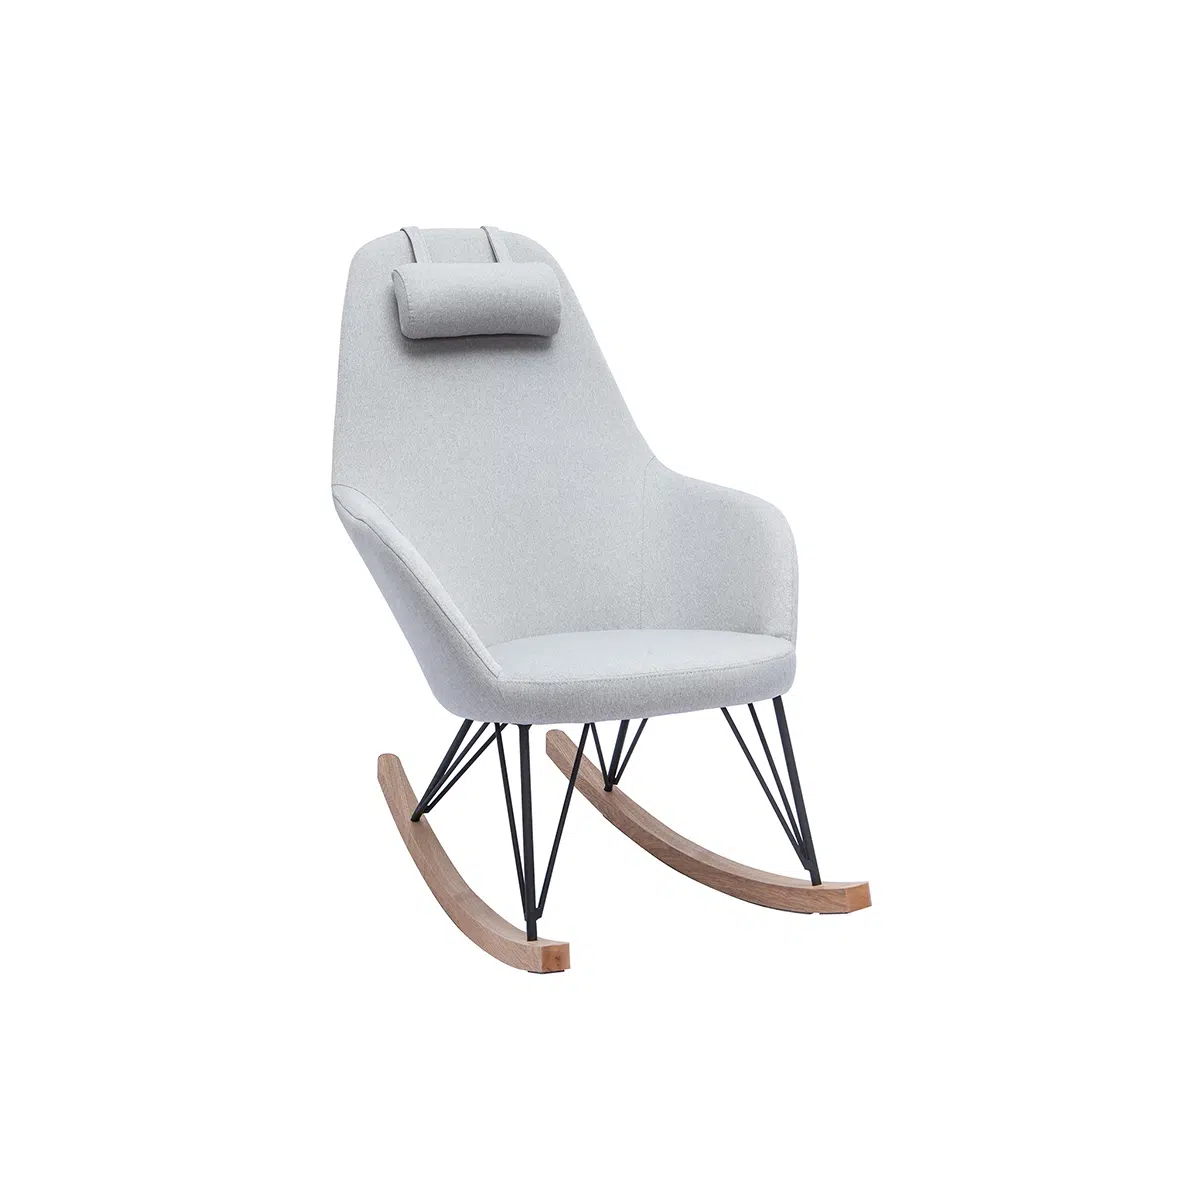 Rocking chair scandinave en tissu gris